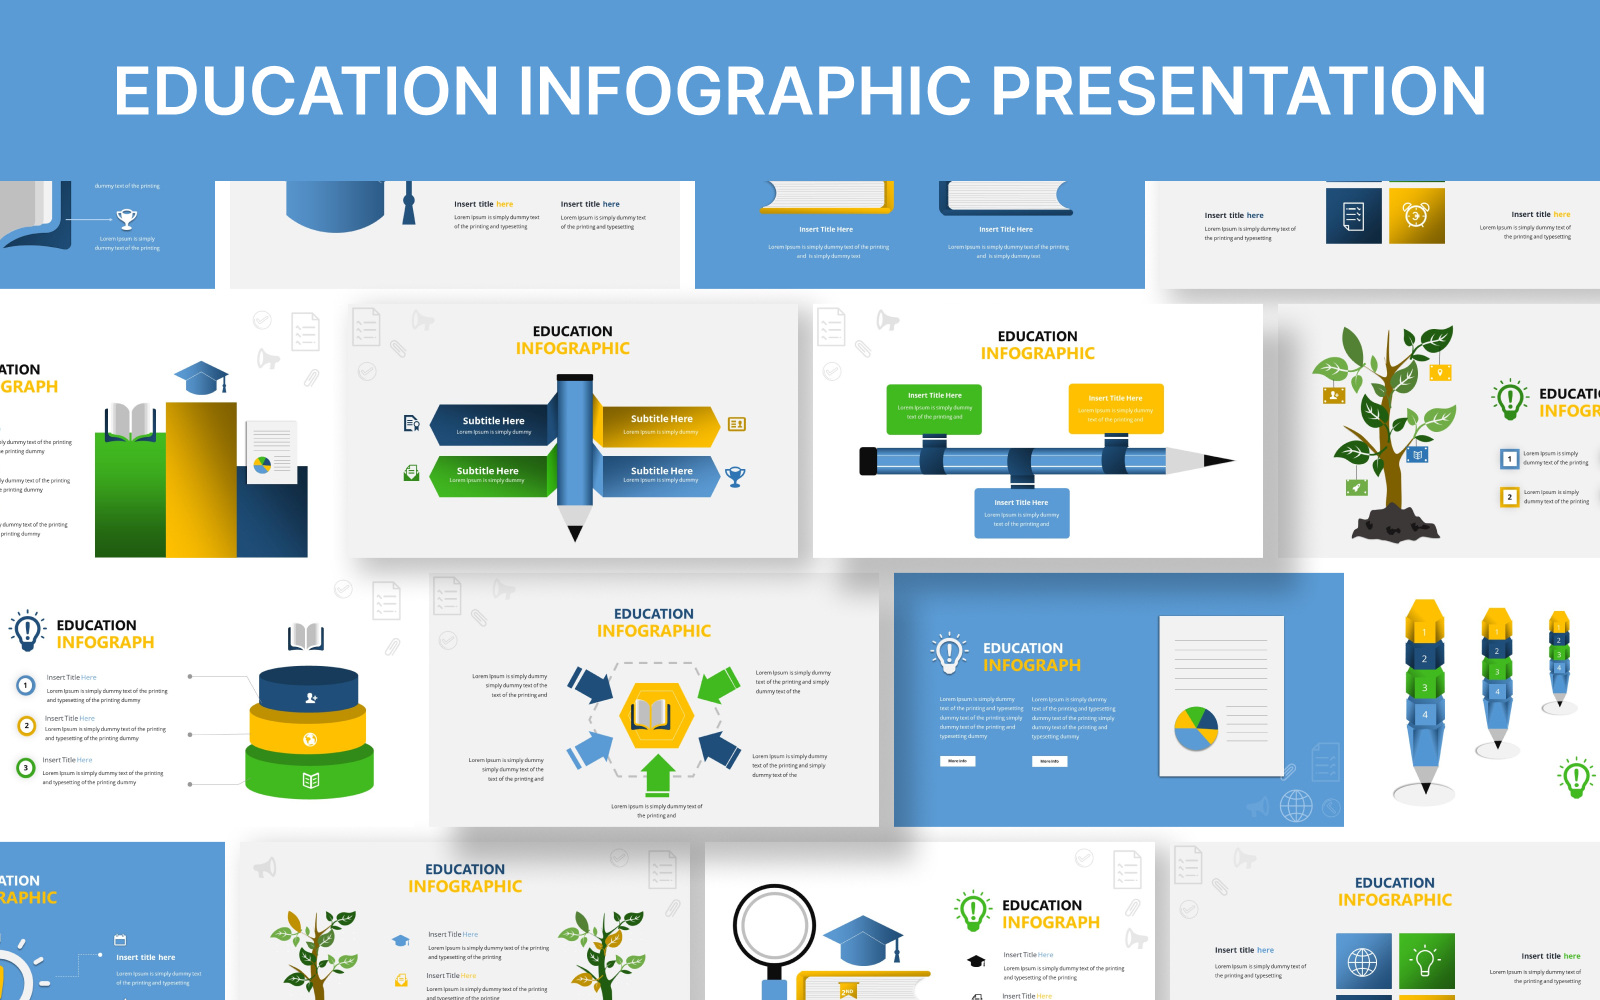 Education Infographic Google Slides Template